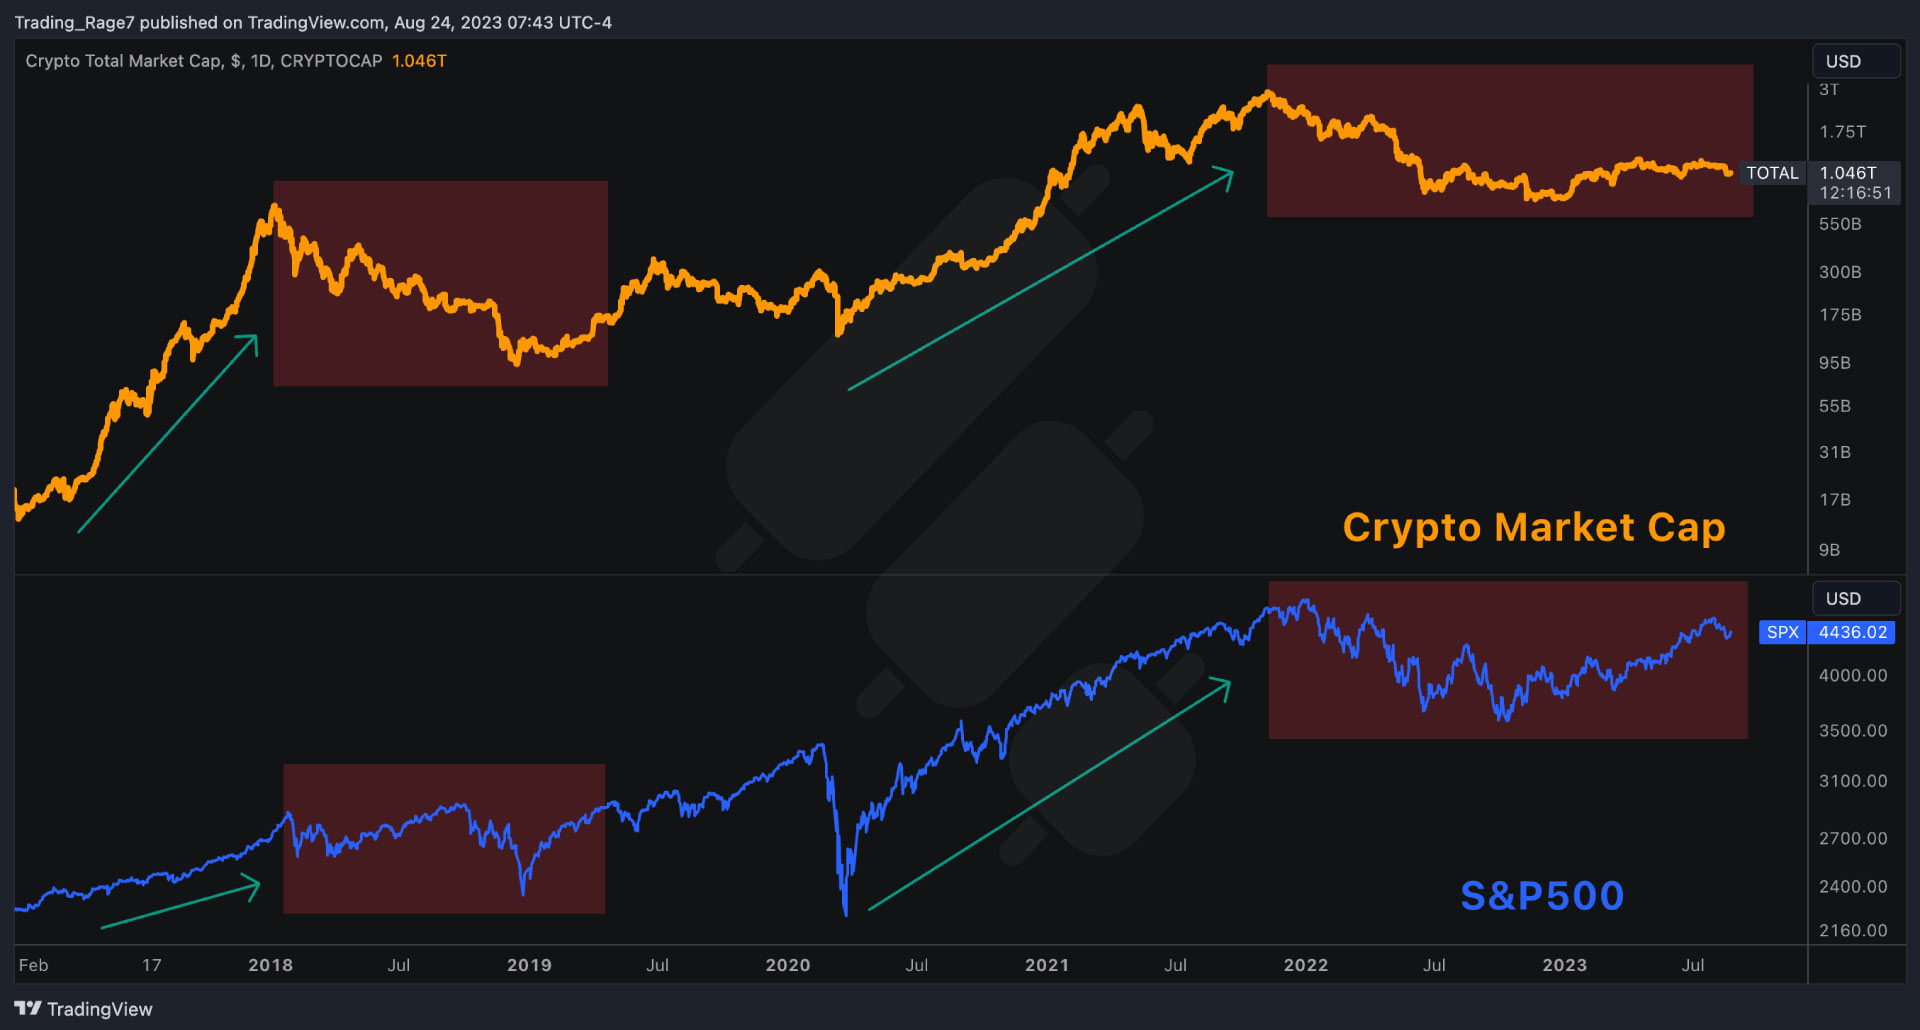 S&P500 Correlation with crypto market cap